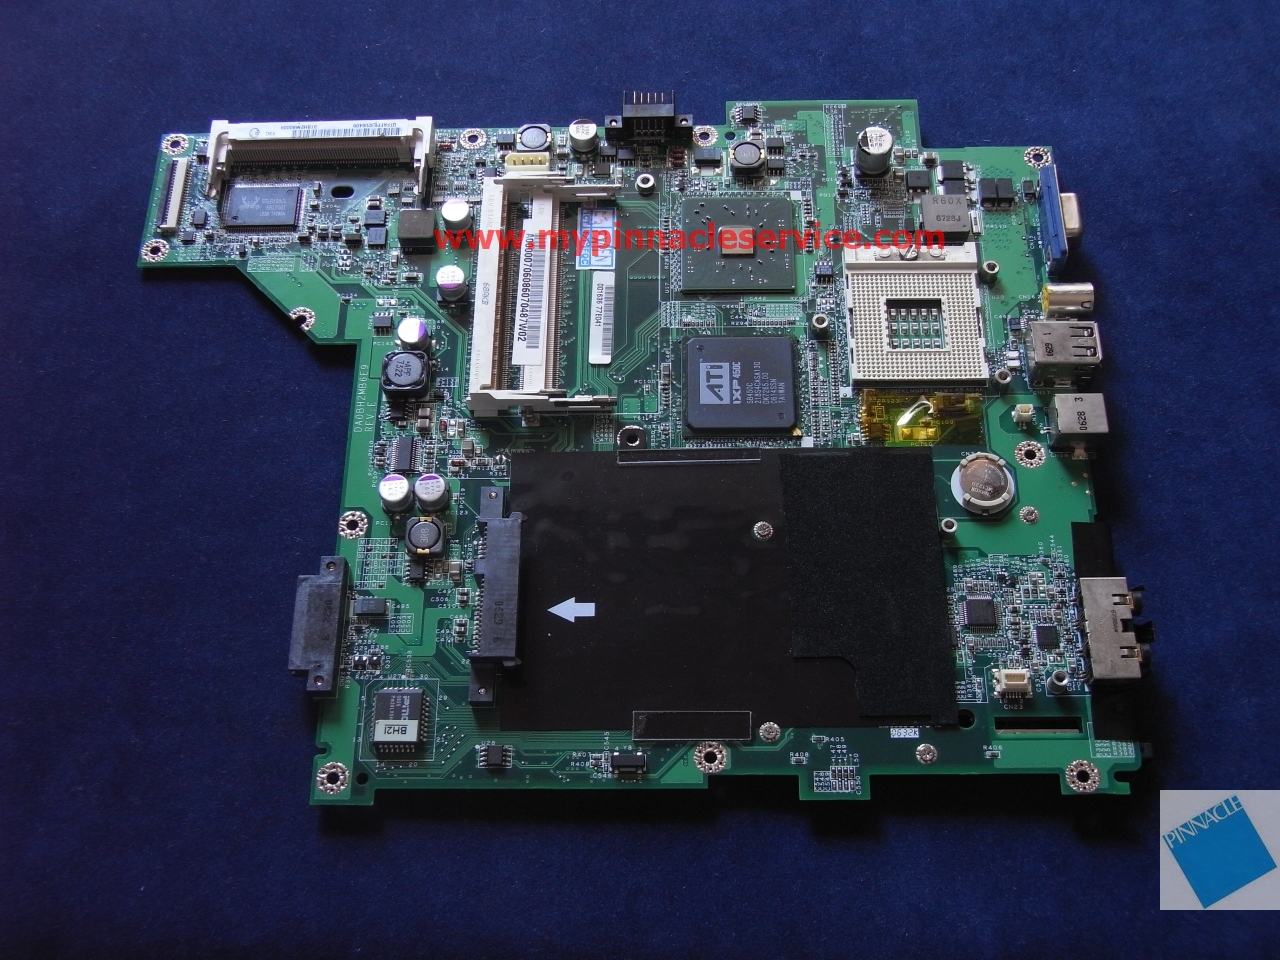 a000007060-motherboard-for-toshiba-satellite-100-da0bl3mb6f0-r0040117.jpg